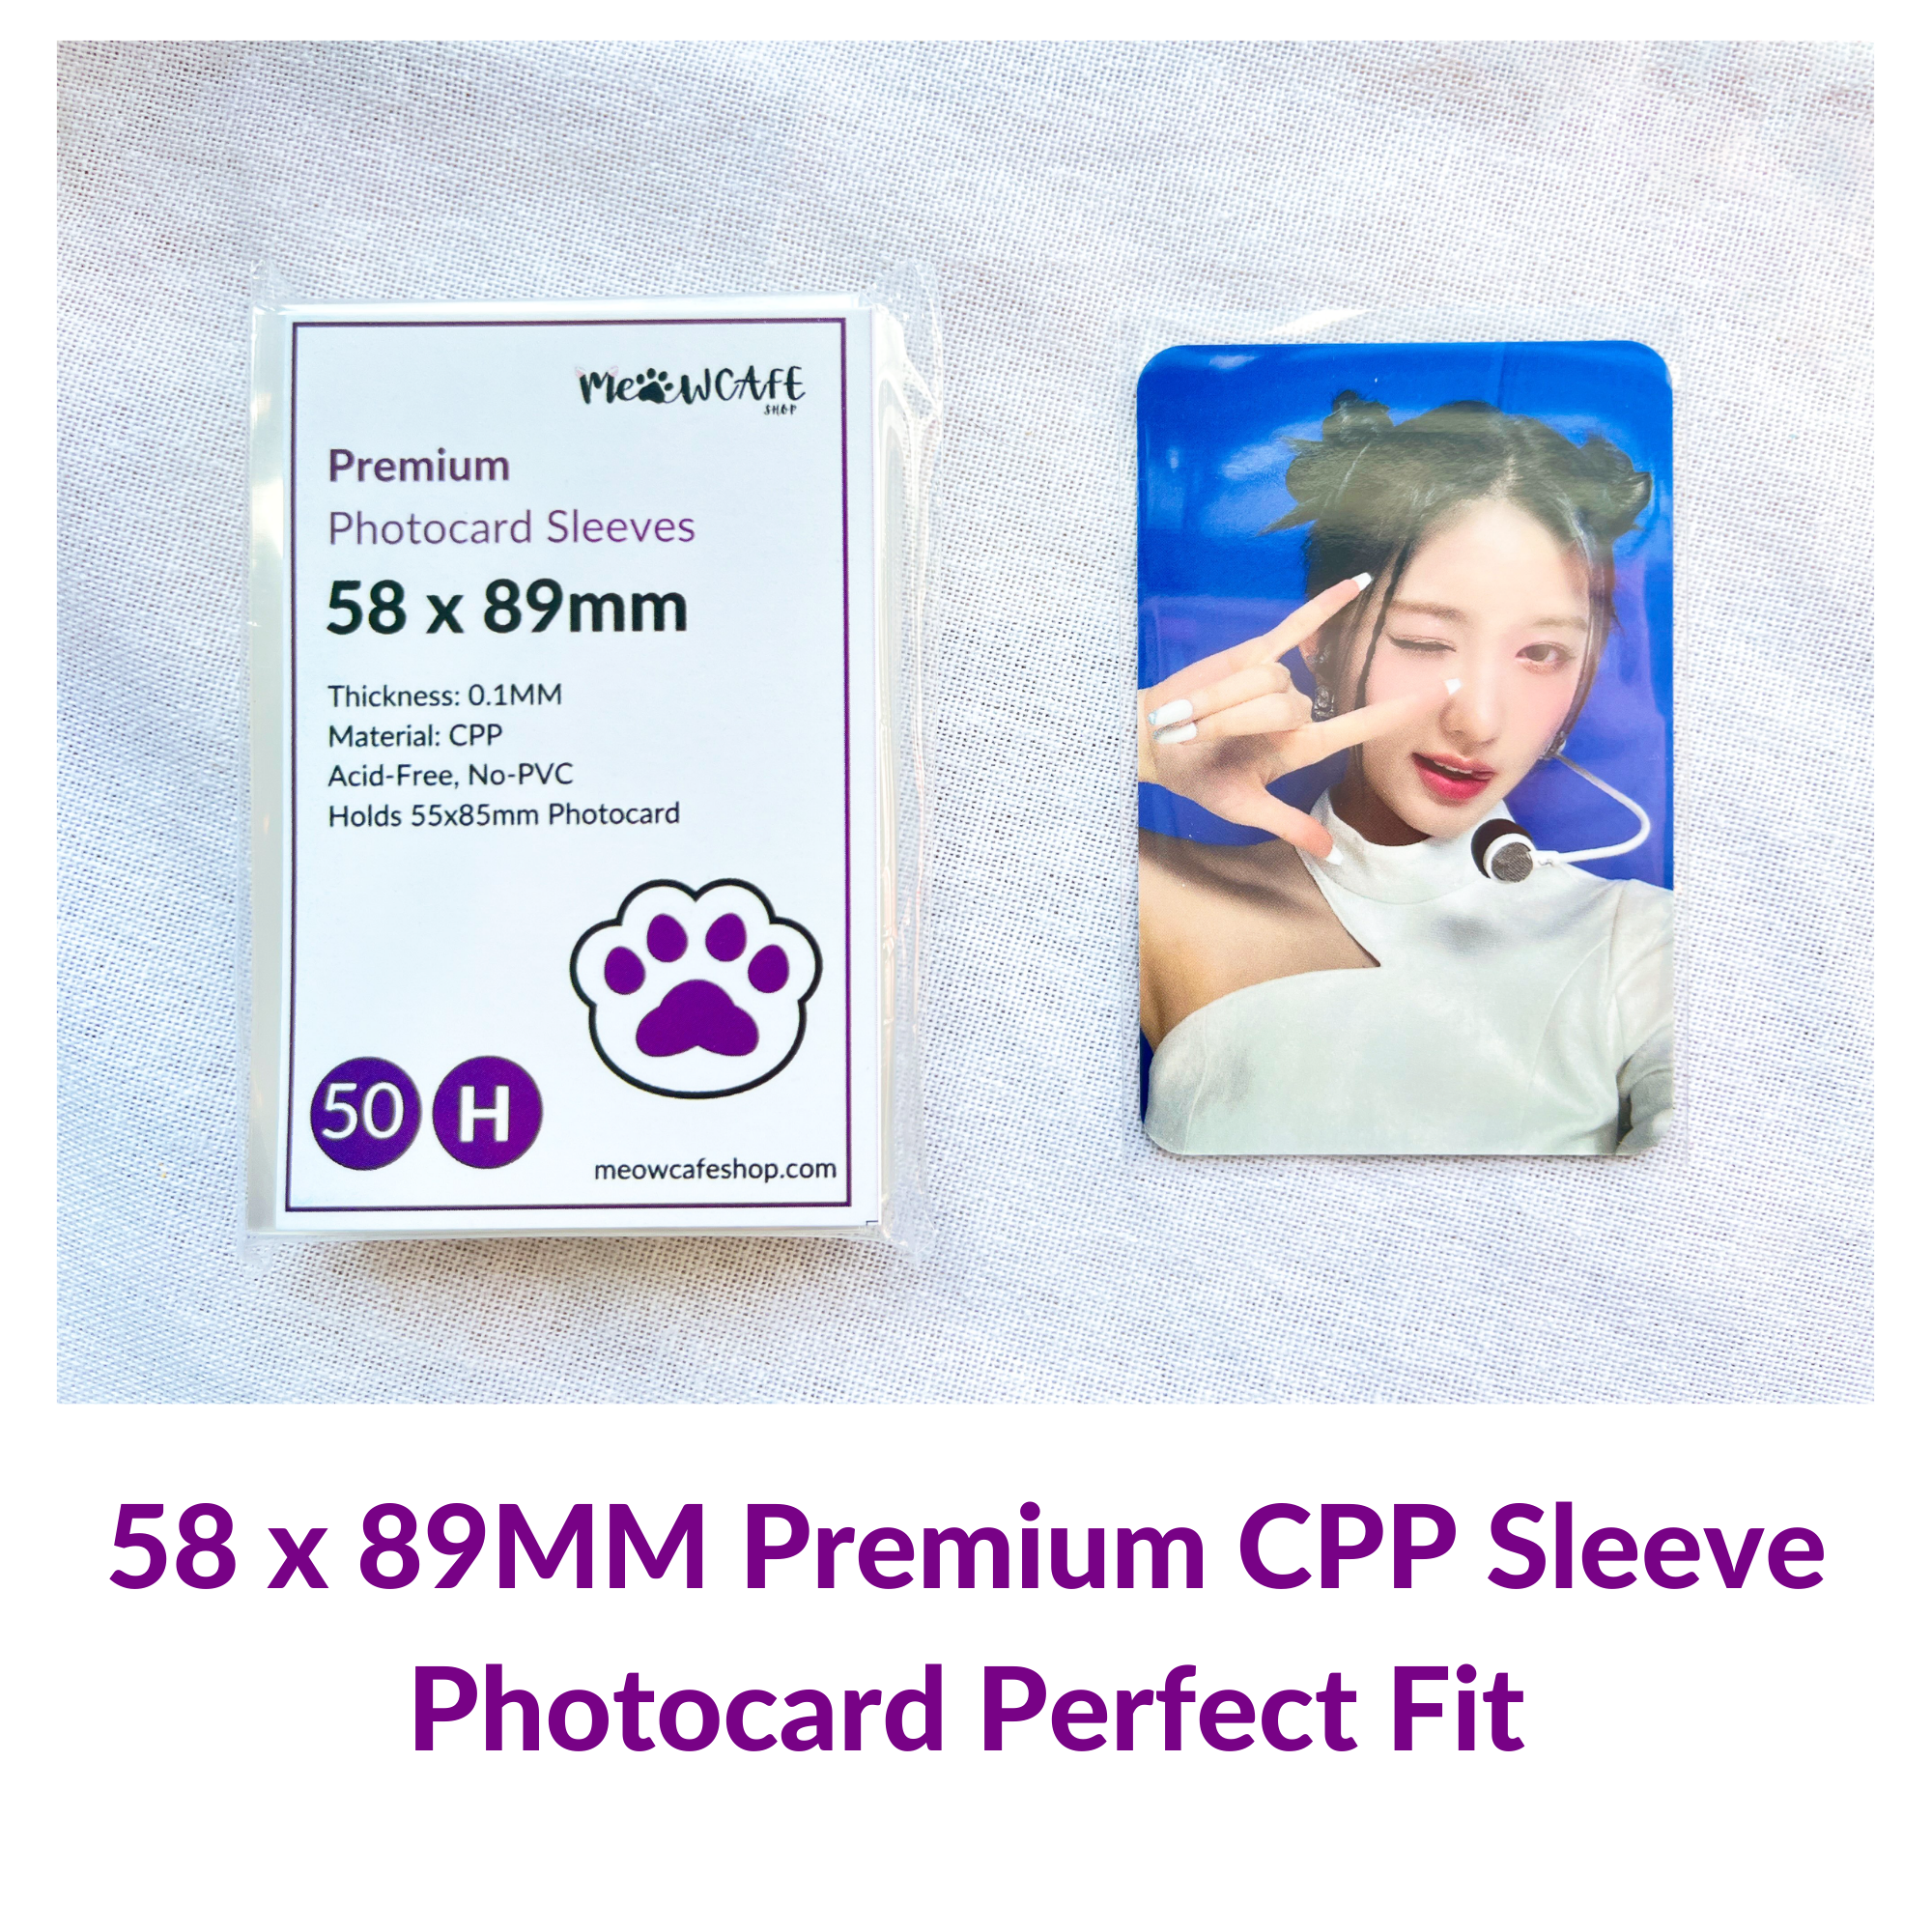 [Valued Bundle] Meowcafe Premium CPP Card Sleeve 400 Sleeves Double Sleeving Bundle Set  + FREE Sleeve Organizer Box